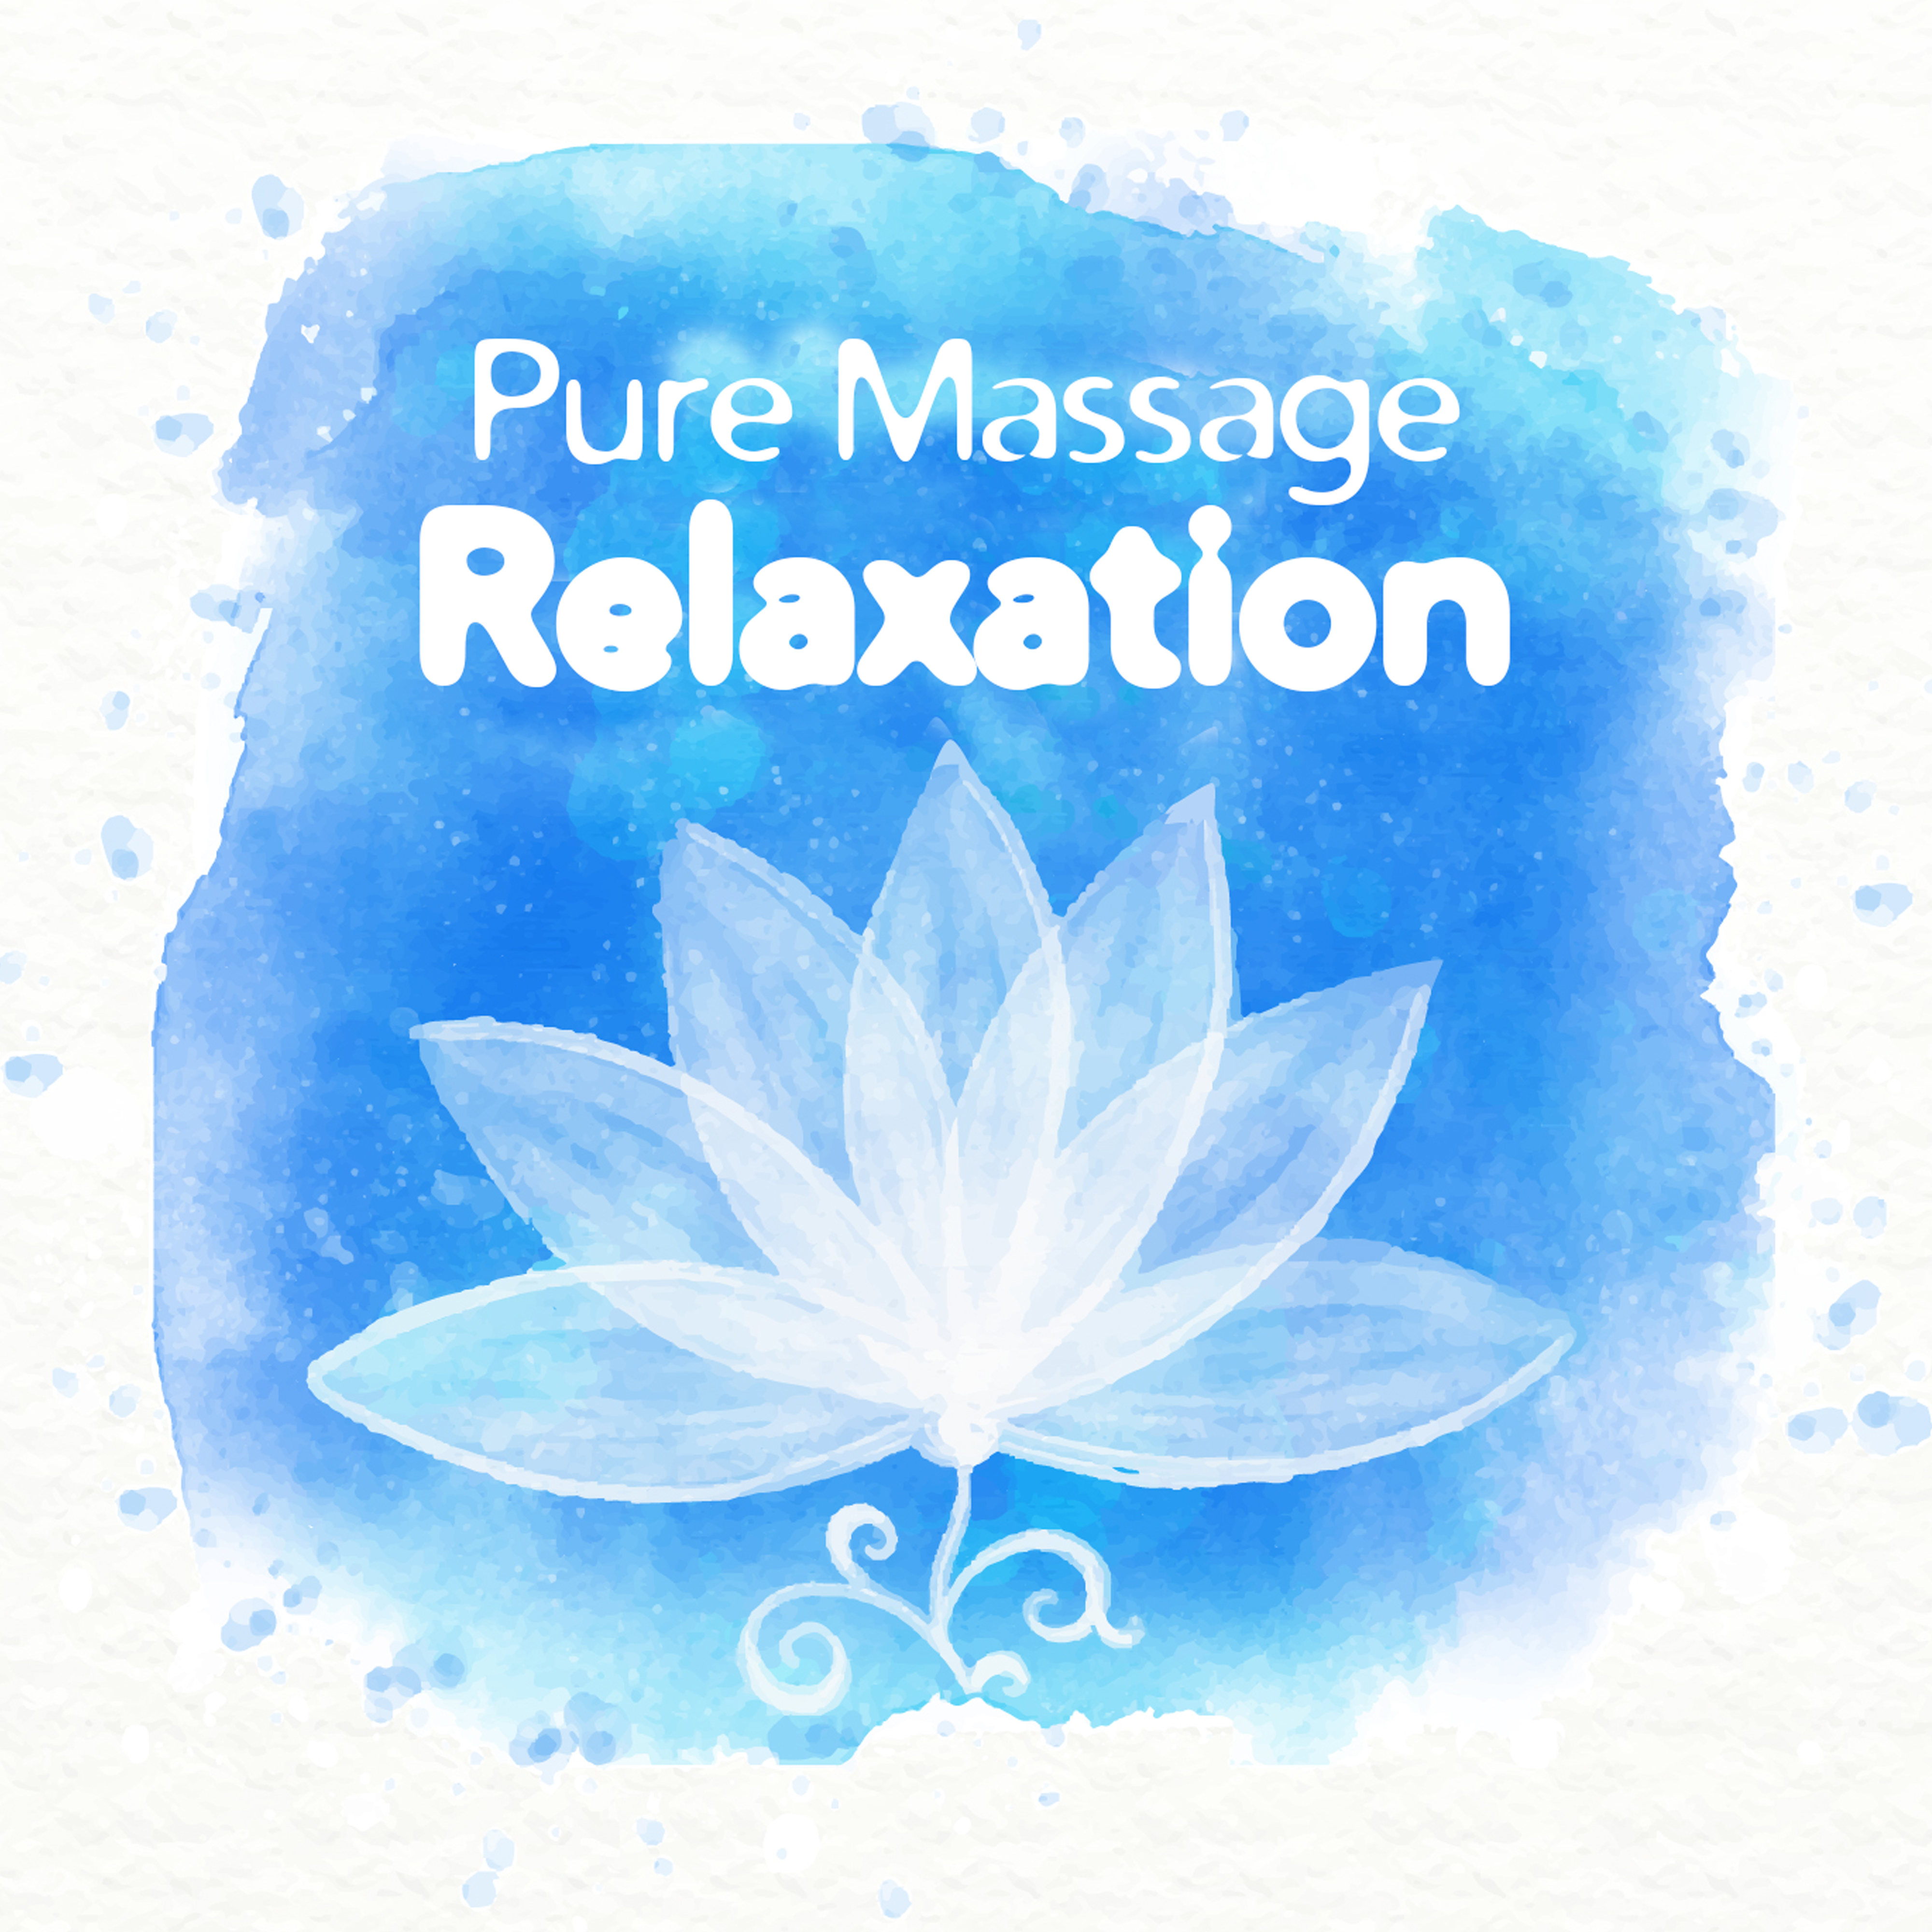 Pure Massage Relaxation